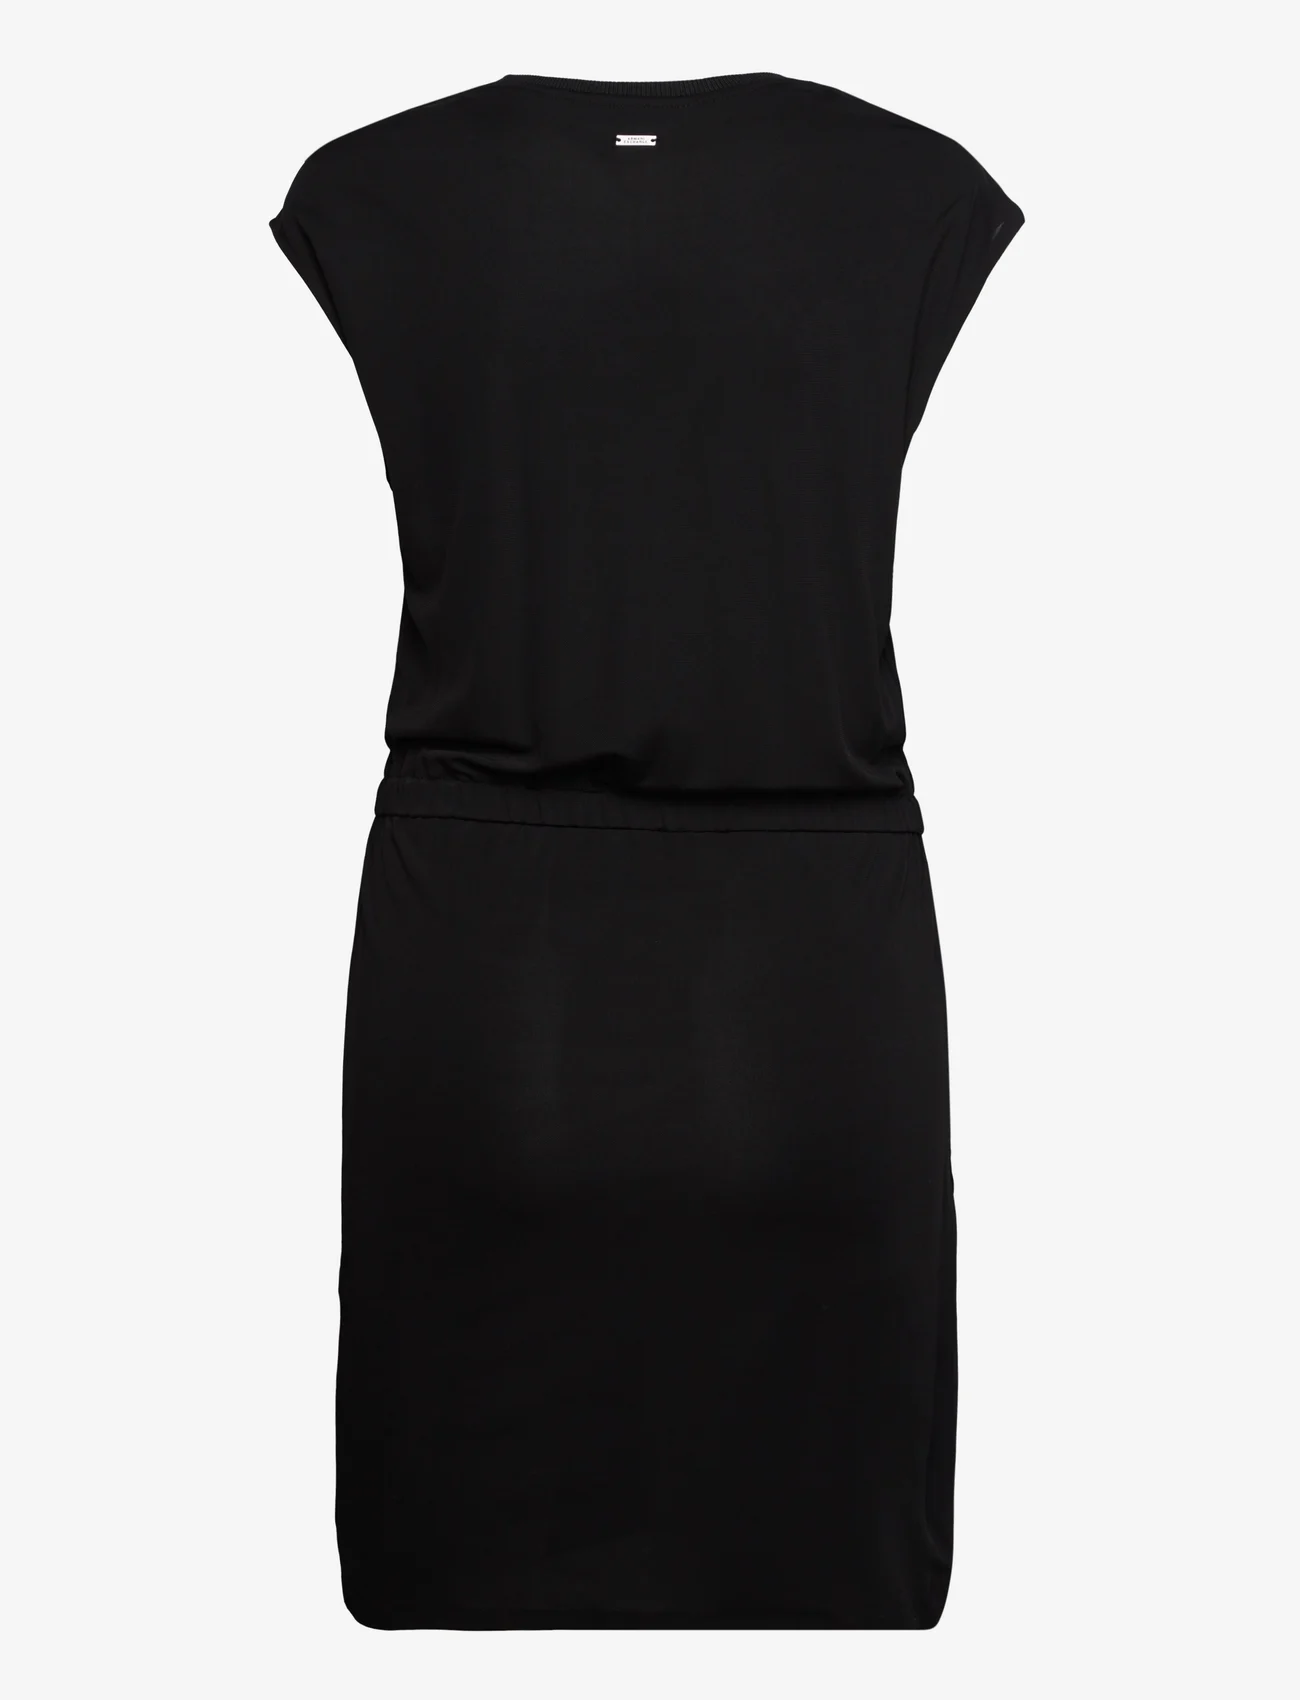 Armani Exchange - DRESS - t-shirt dresses - 1200-black - 1